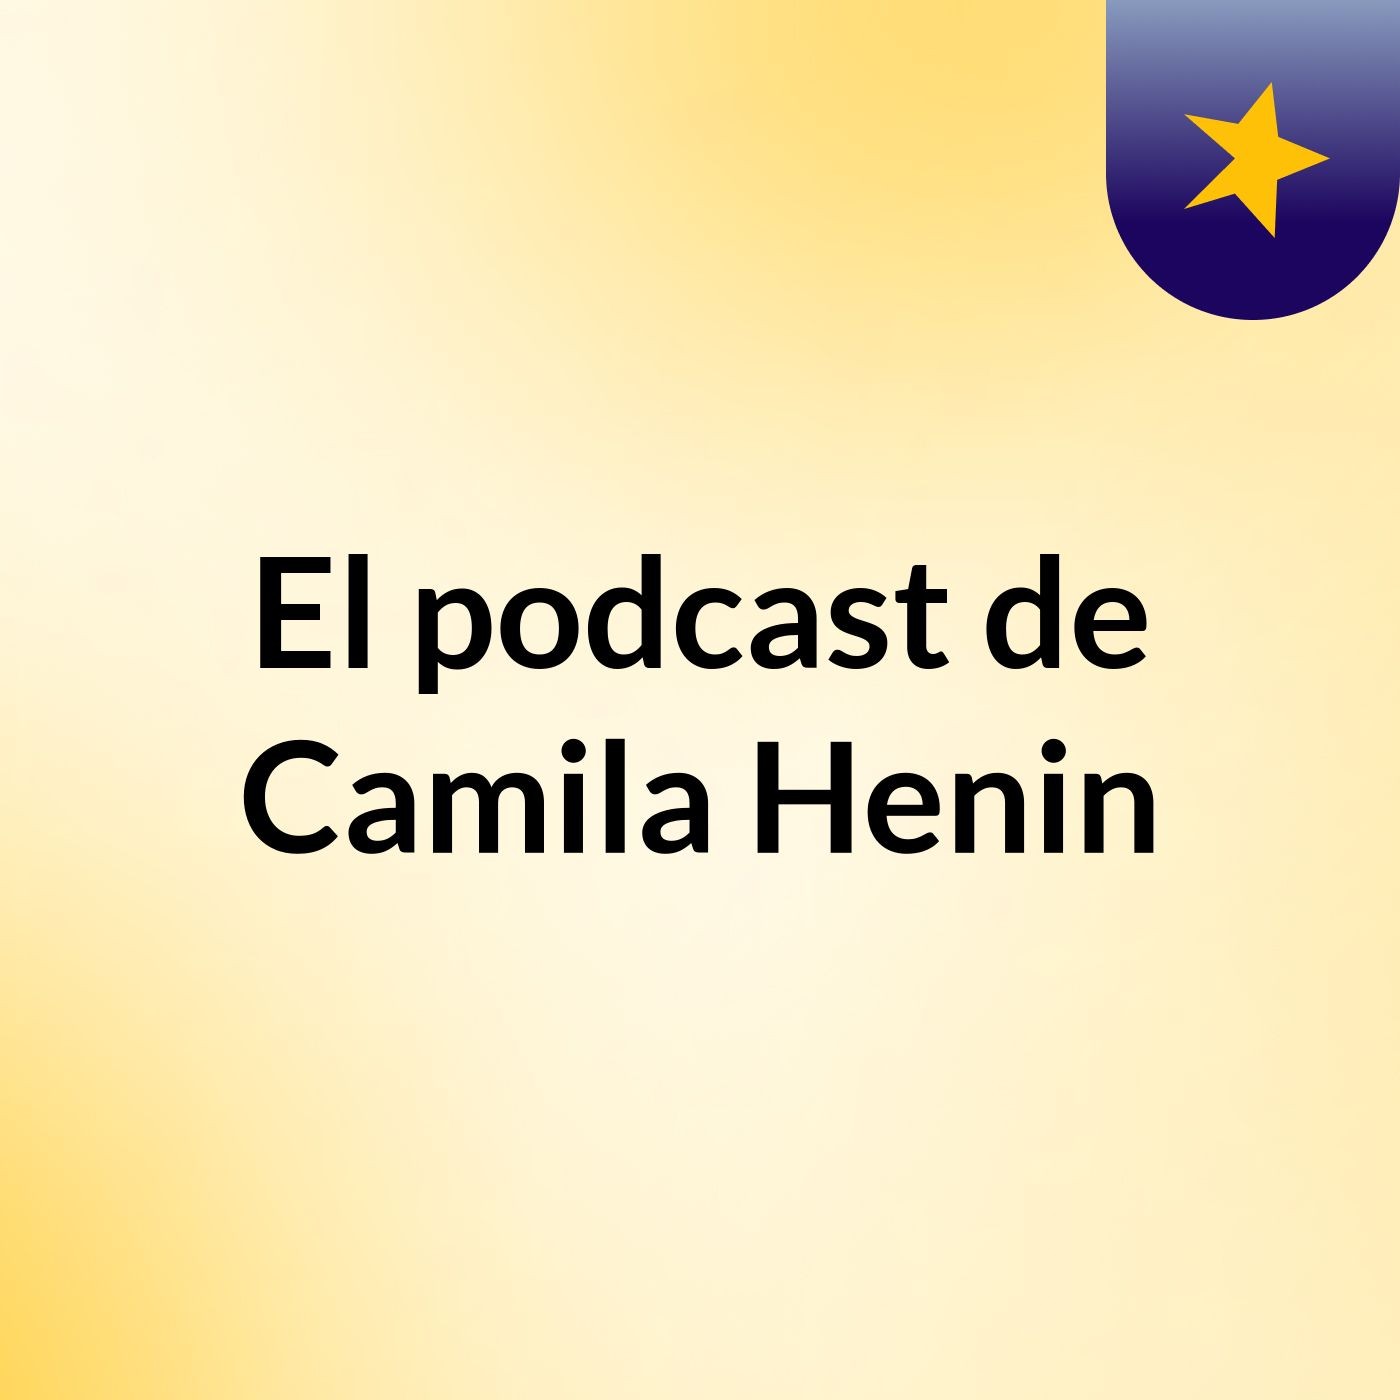 El podcast de Camila Henin